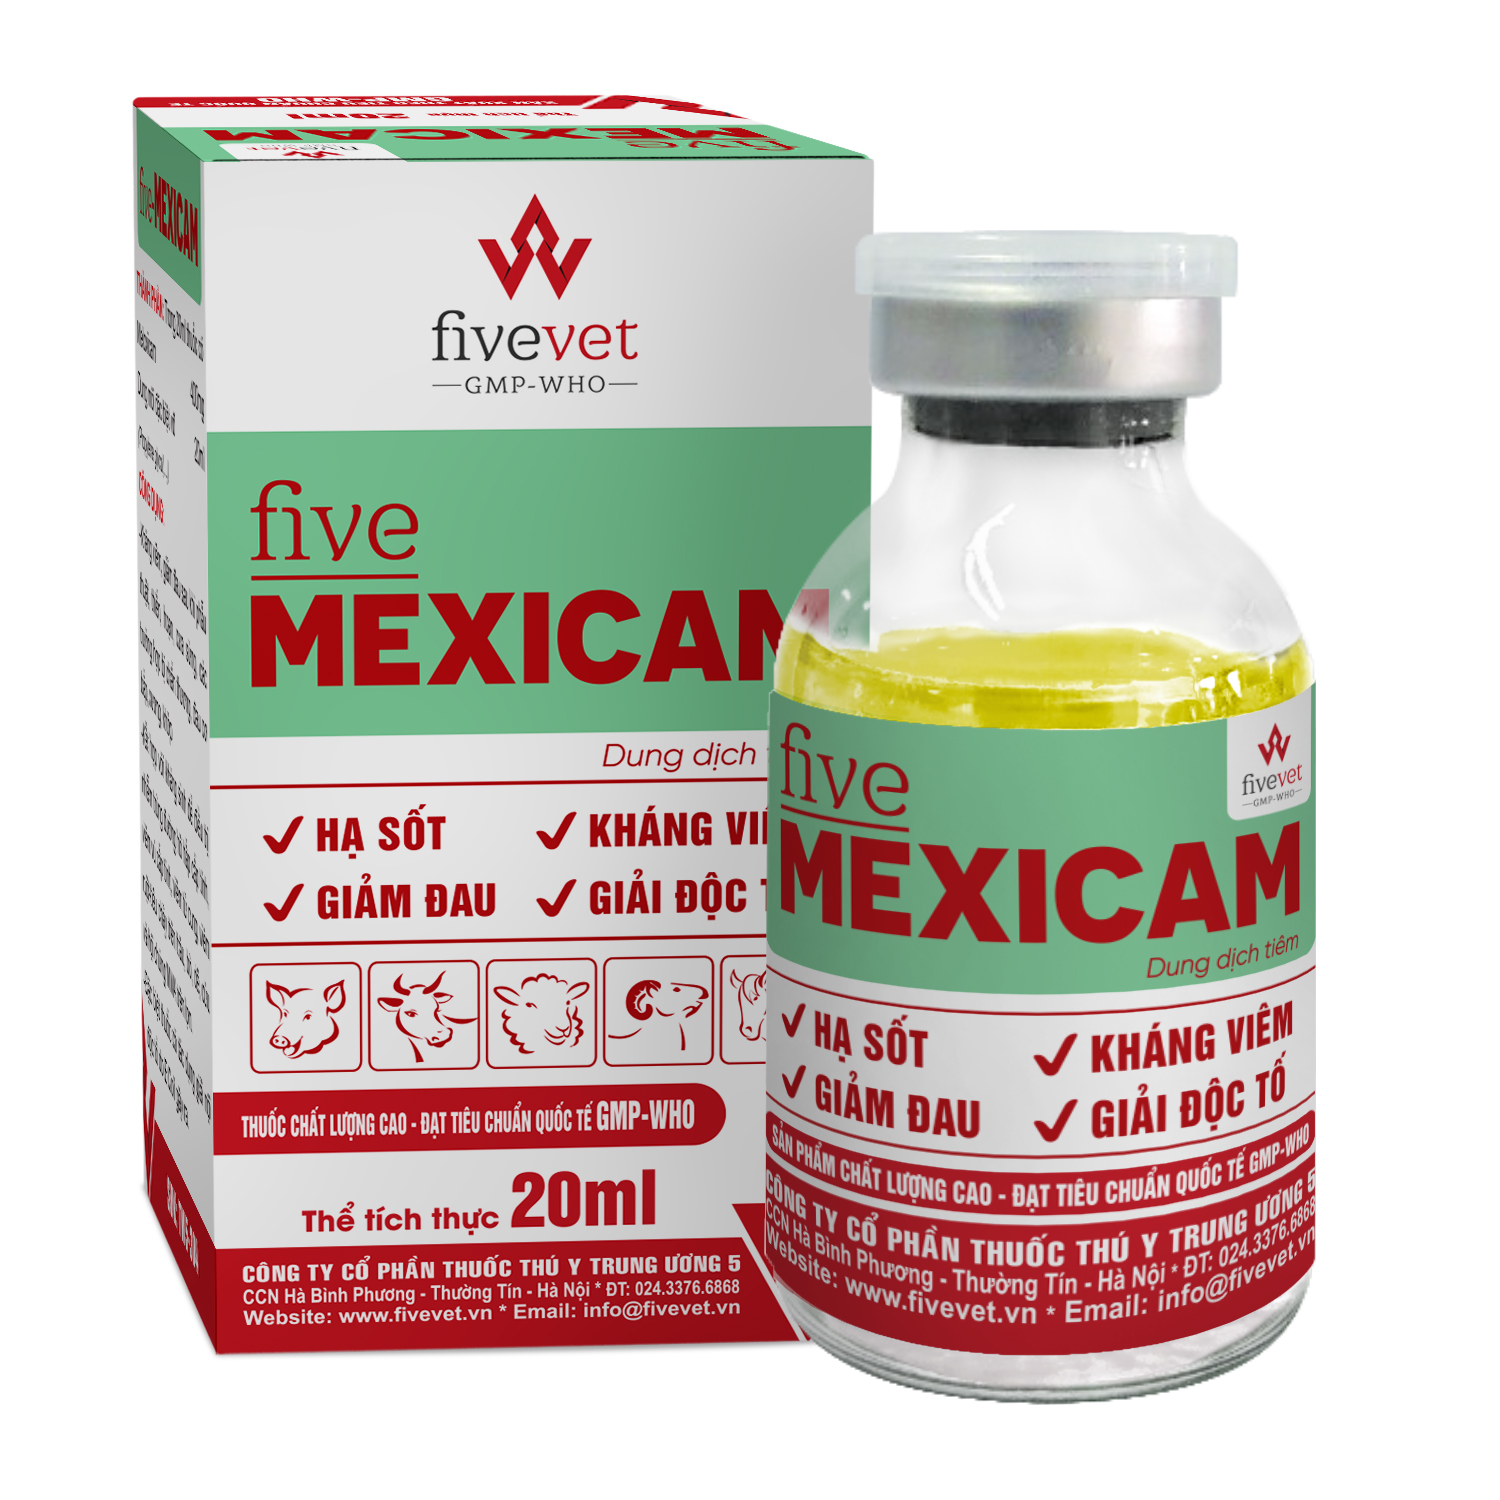 Five-Mexicam